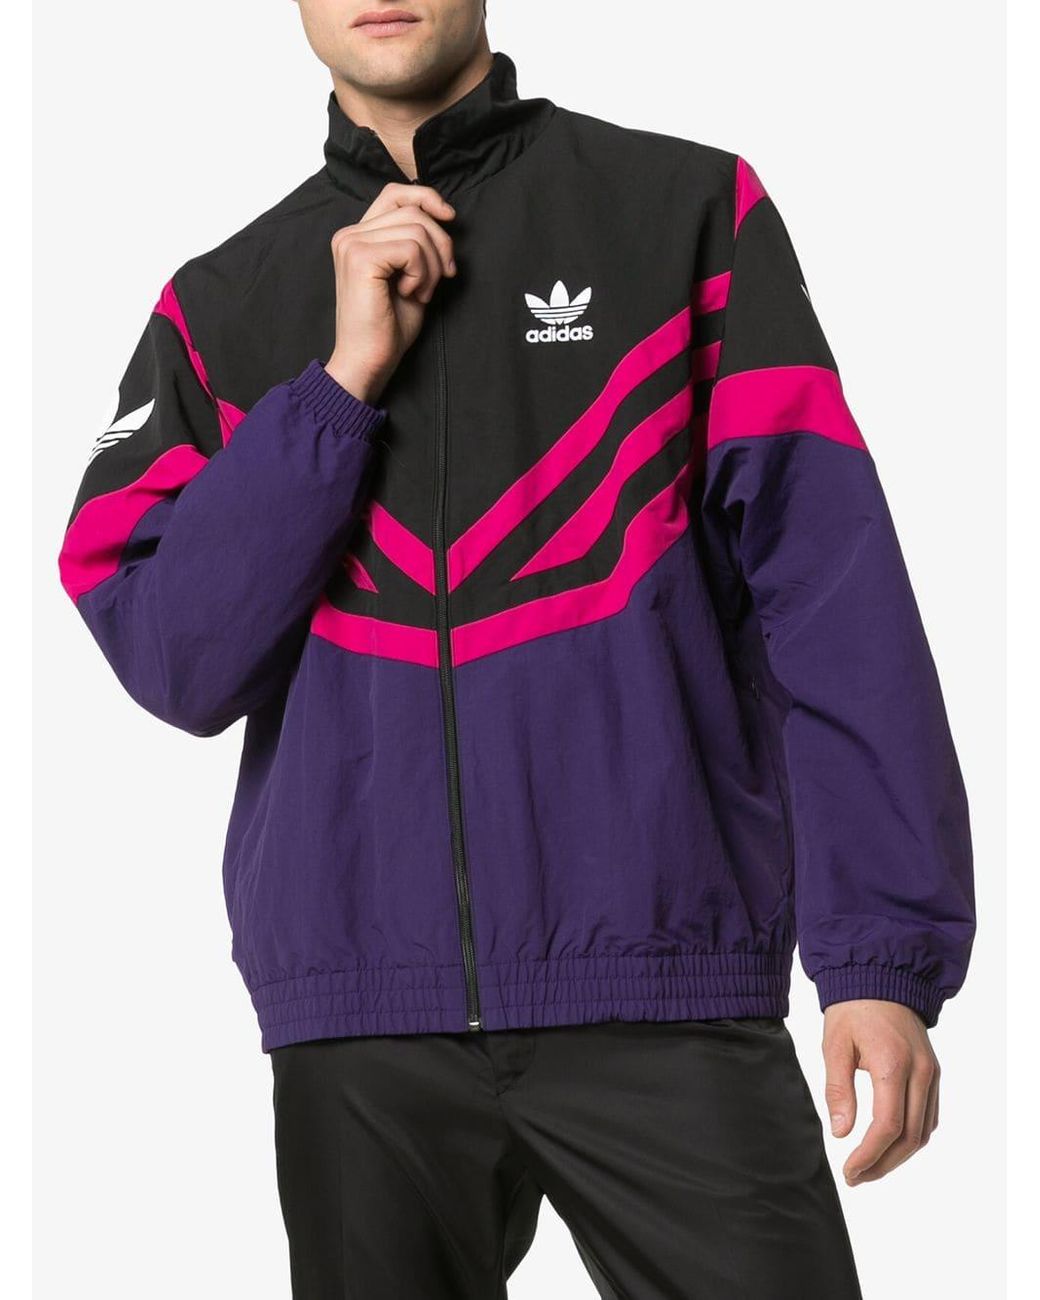 Adidas track. Track Jacket адидас. Adidas Originals adidas sportive track Jacket. Adidas Originals куртка sportive TRKTOP. Adidas Purple Jacket.